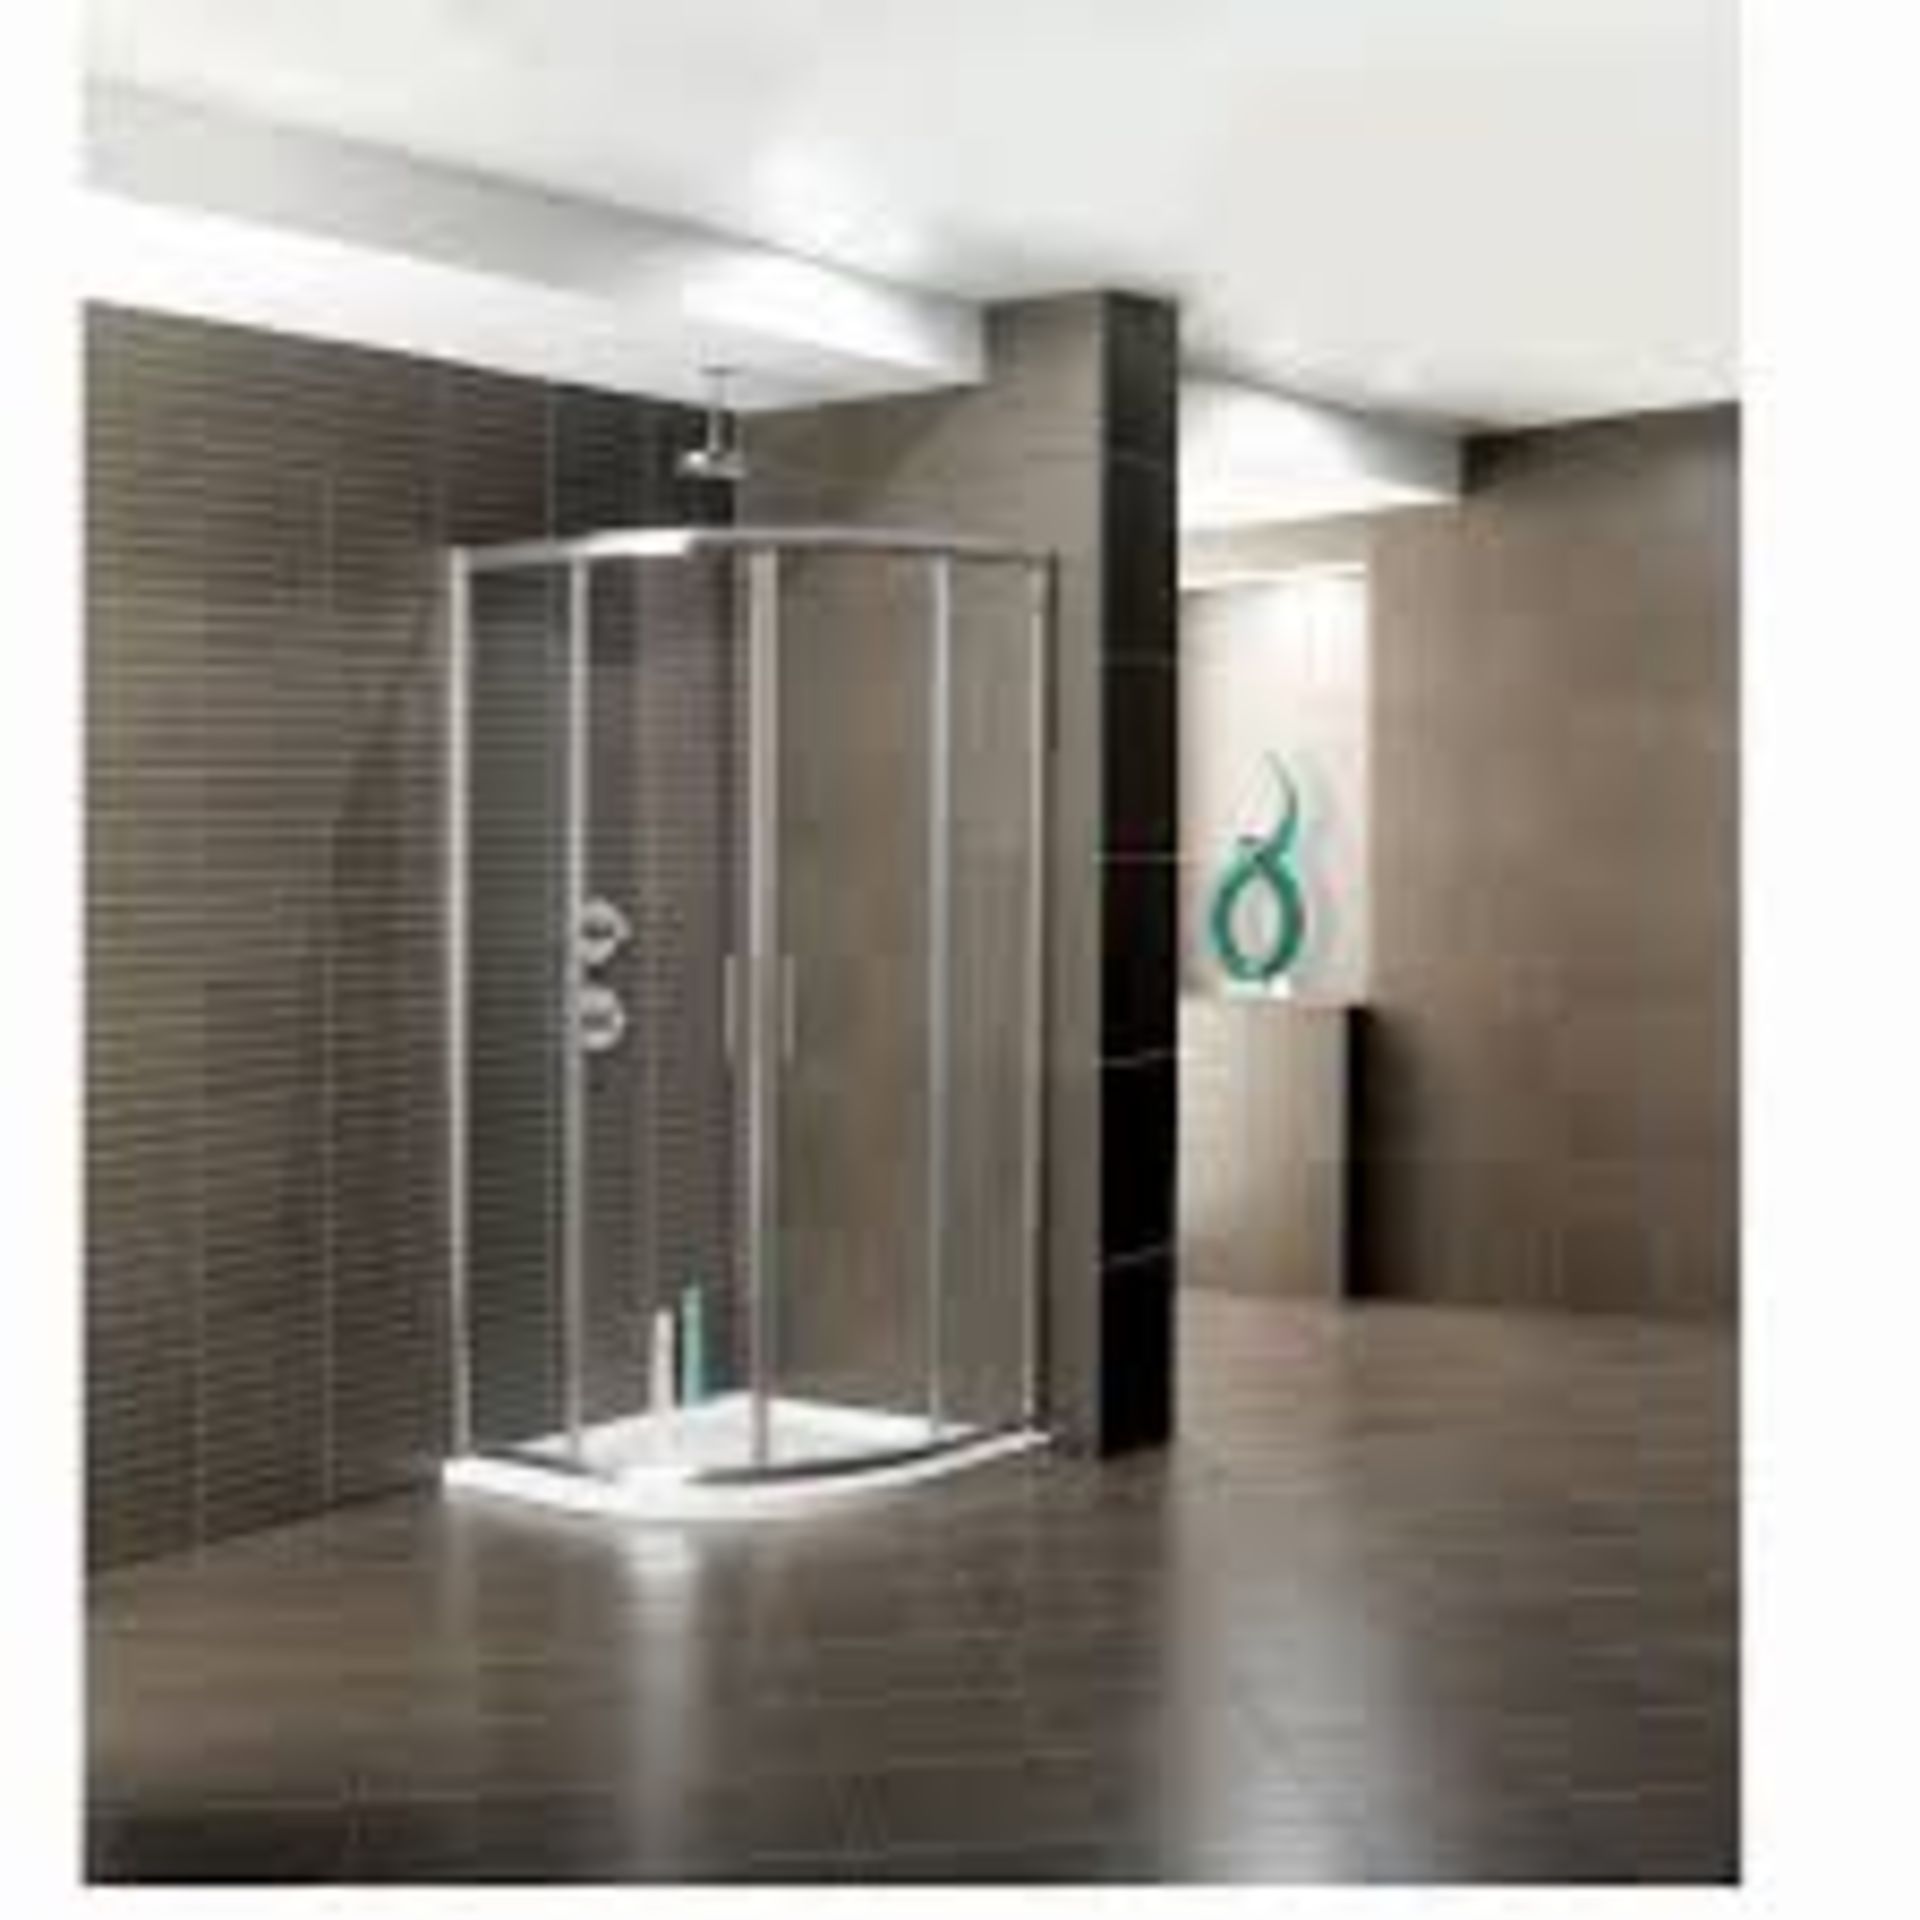 4 x Vogue SULIS Quadrant 900mm Shower Enclosures - Polished Chrome Finish - 6mm Clear Glass - T